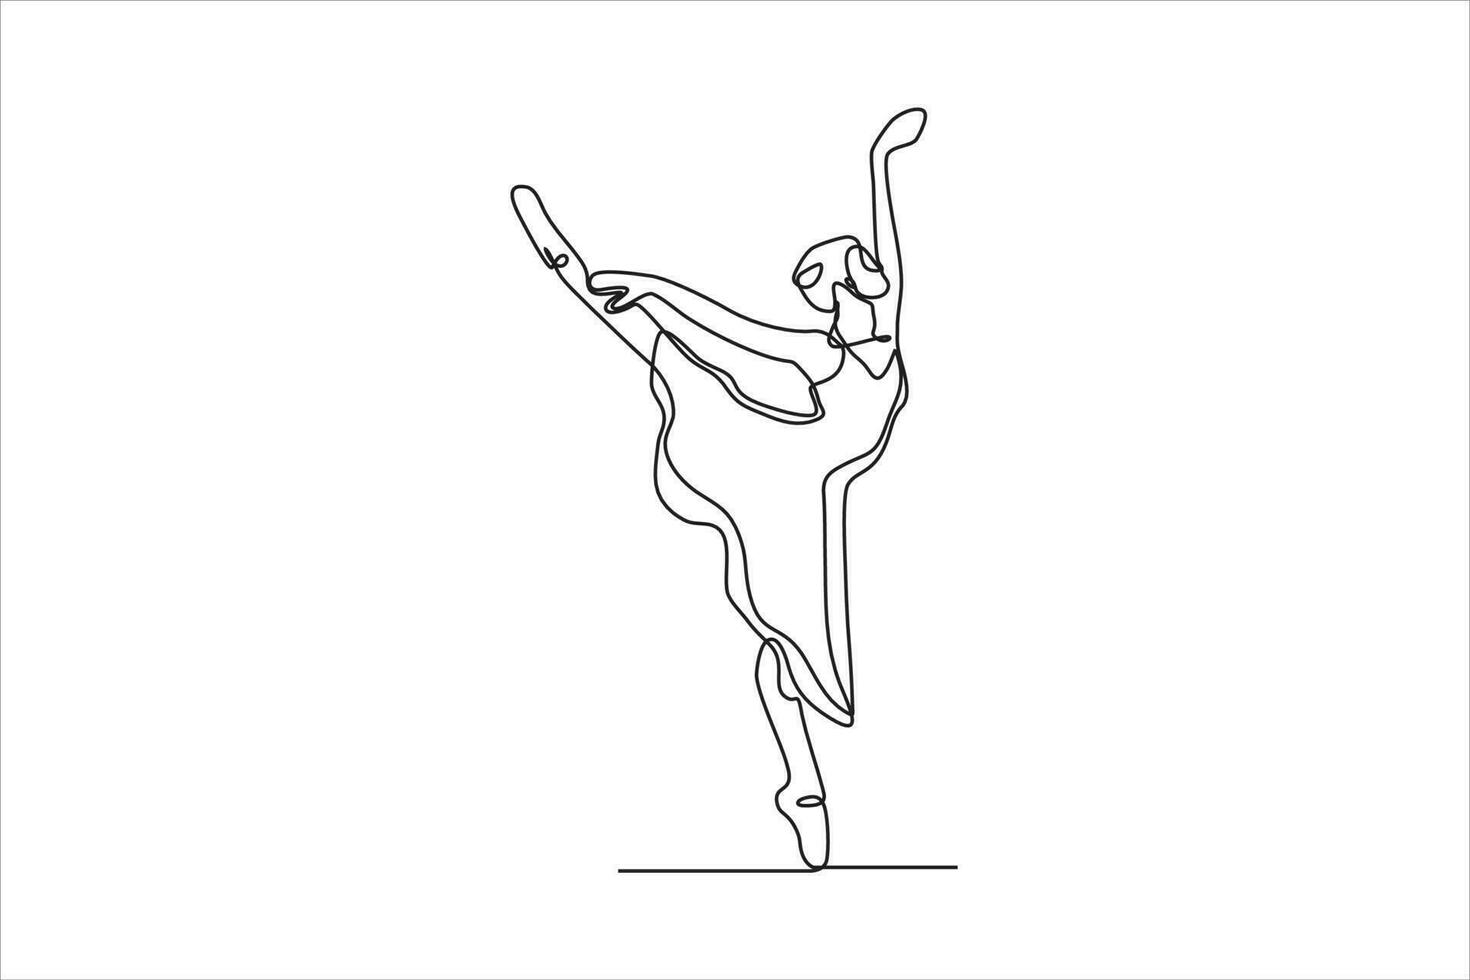 kontinuerlig linje teckning av kvinna dans balett illustration vektor